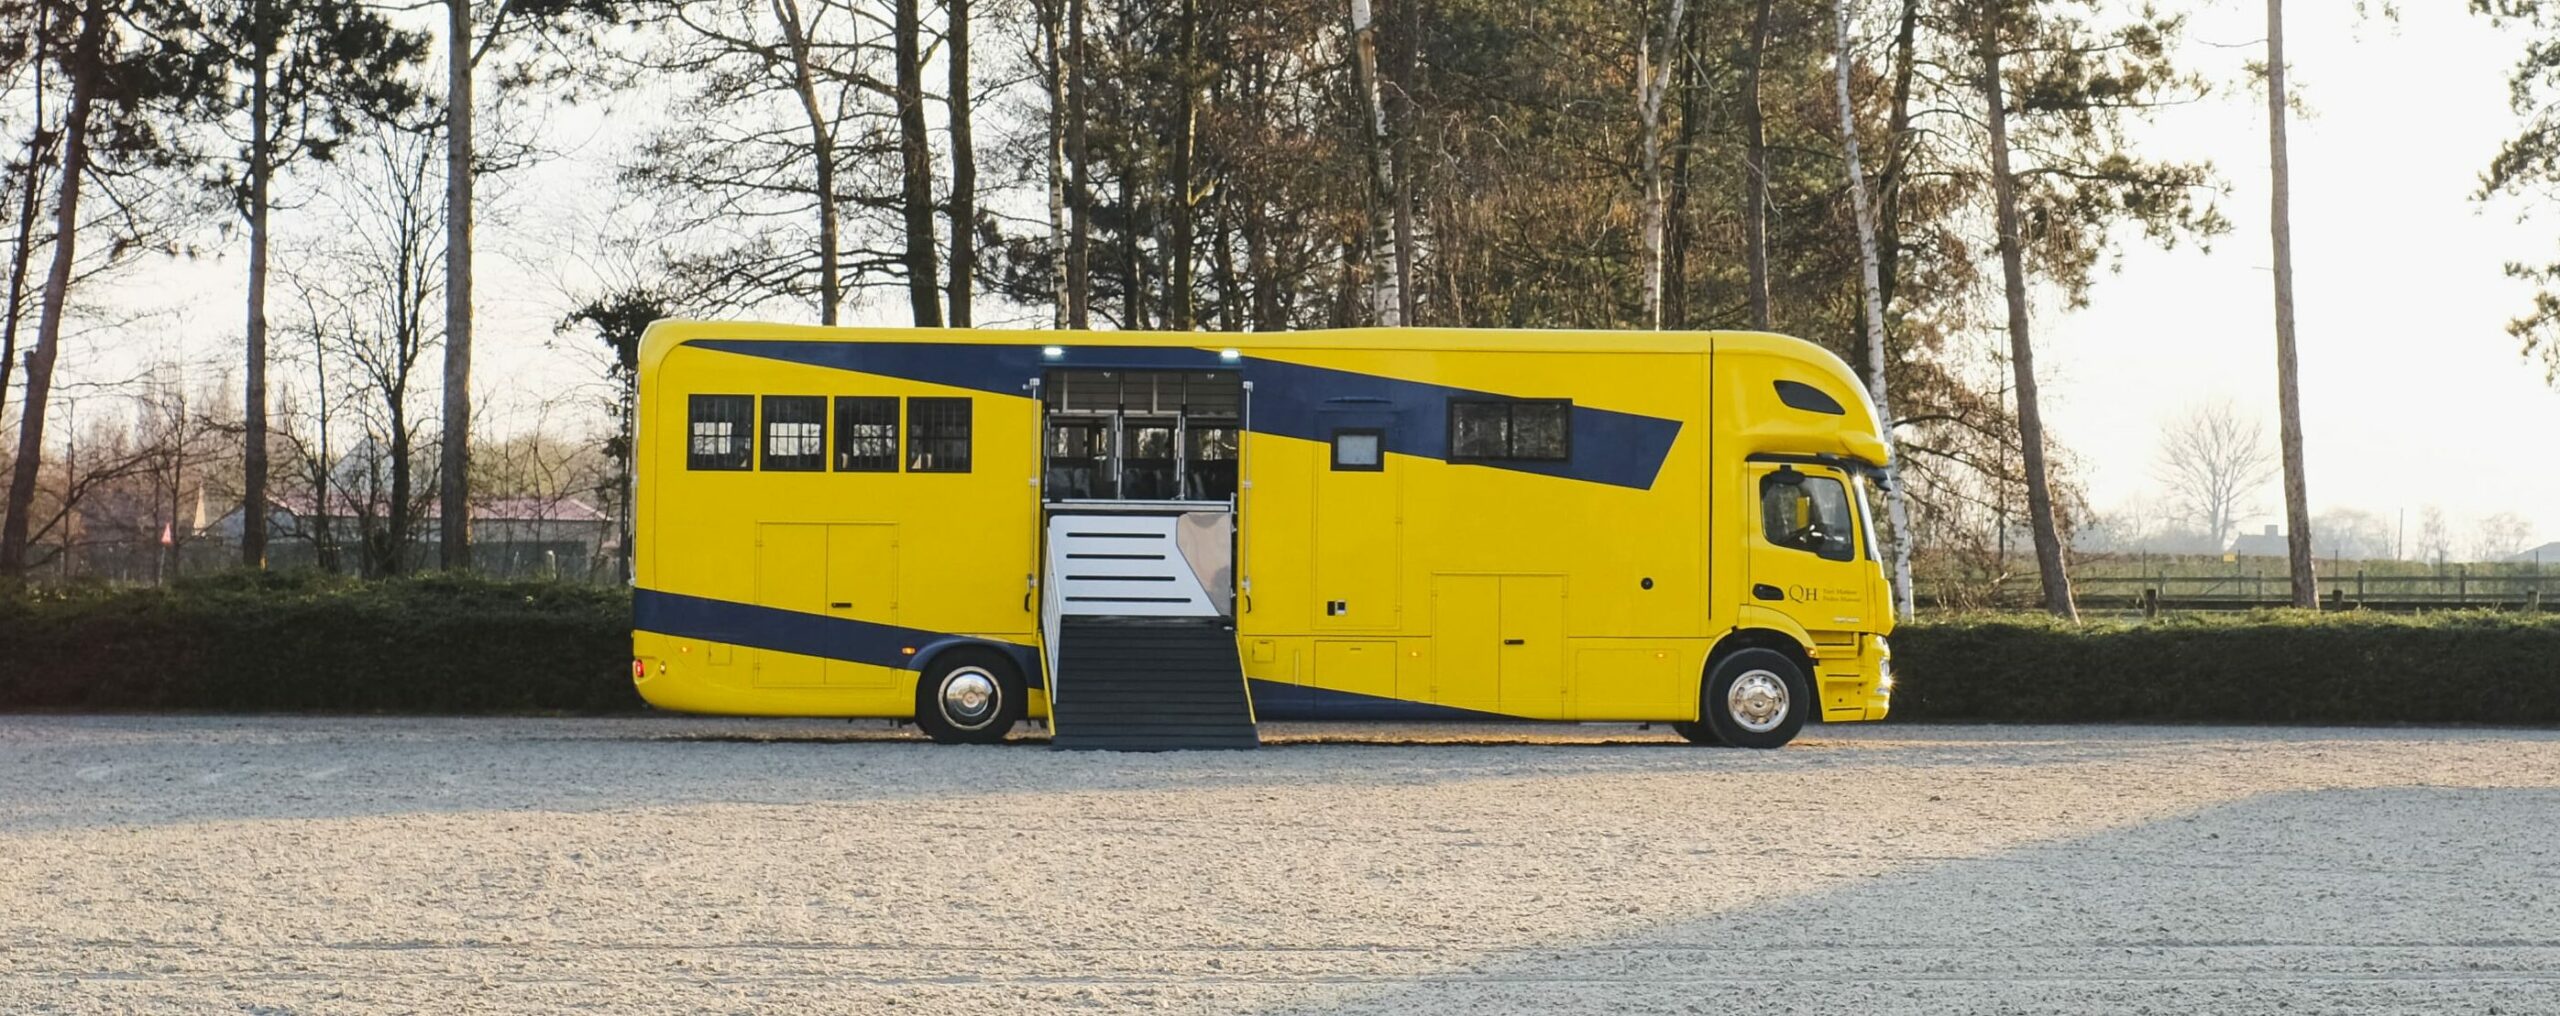 Image Krismar Horse Trucks